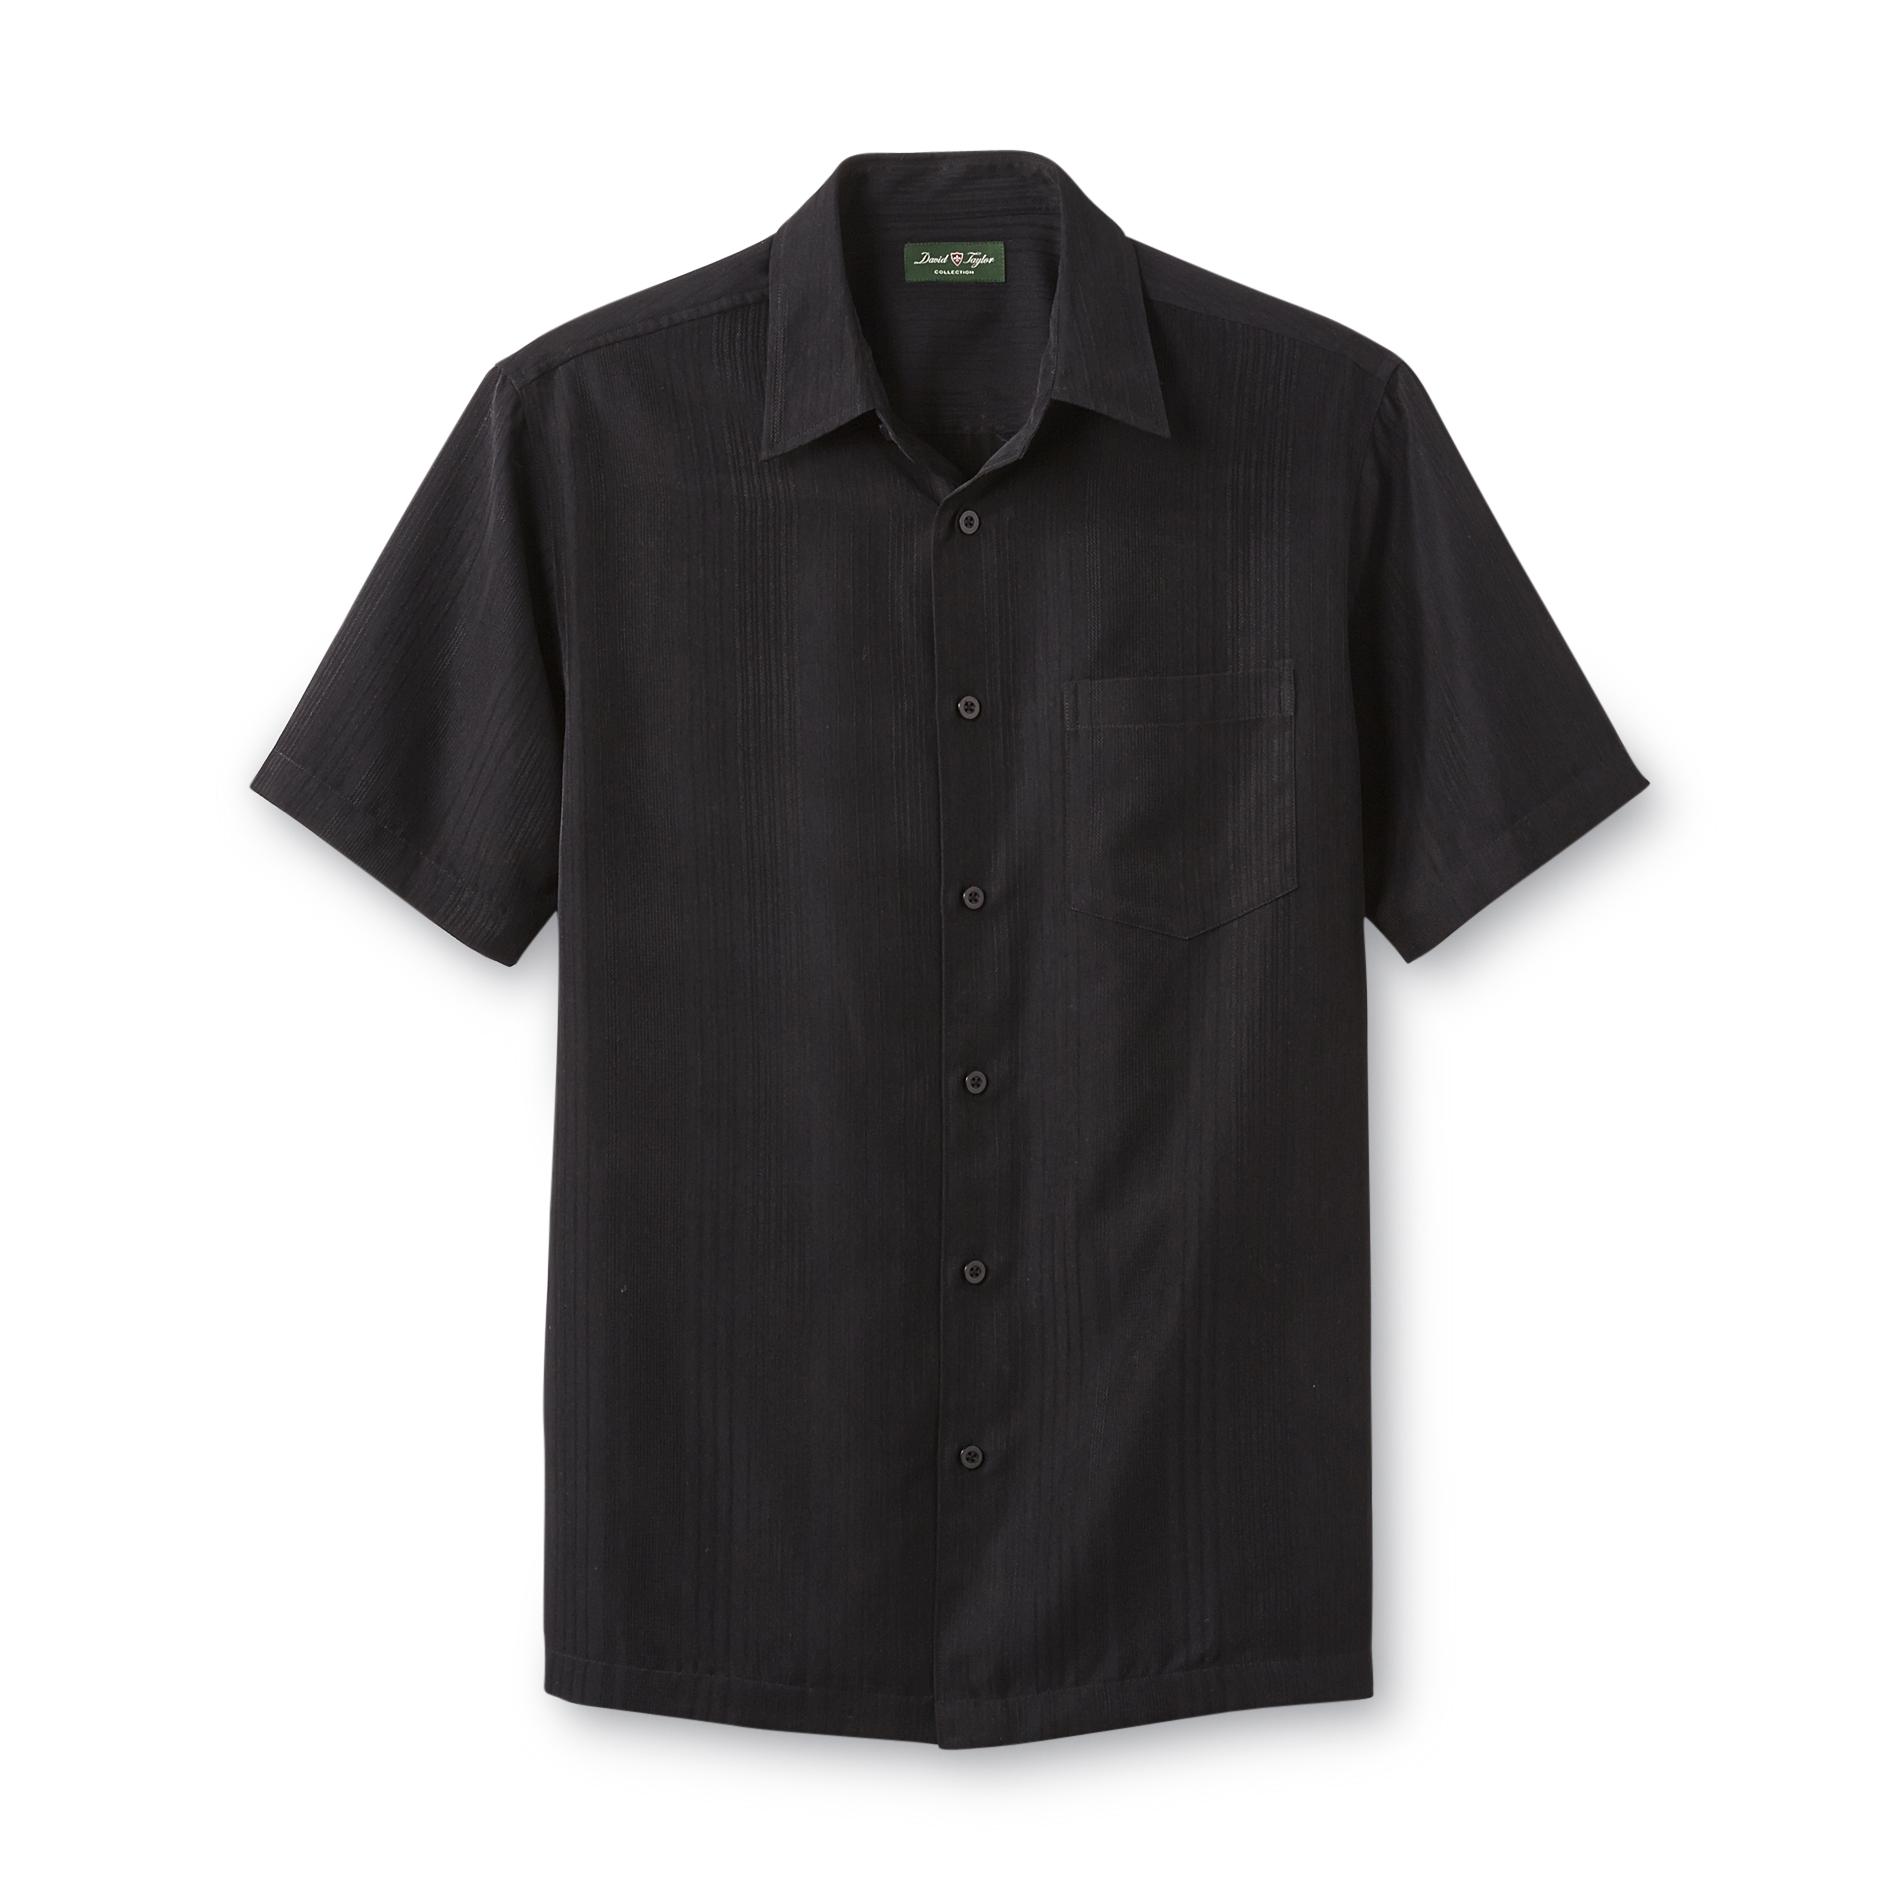 David Taylor Collection Men's Short-Sleeve Shirt - Jacquard Stripe